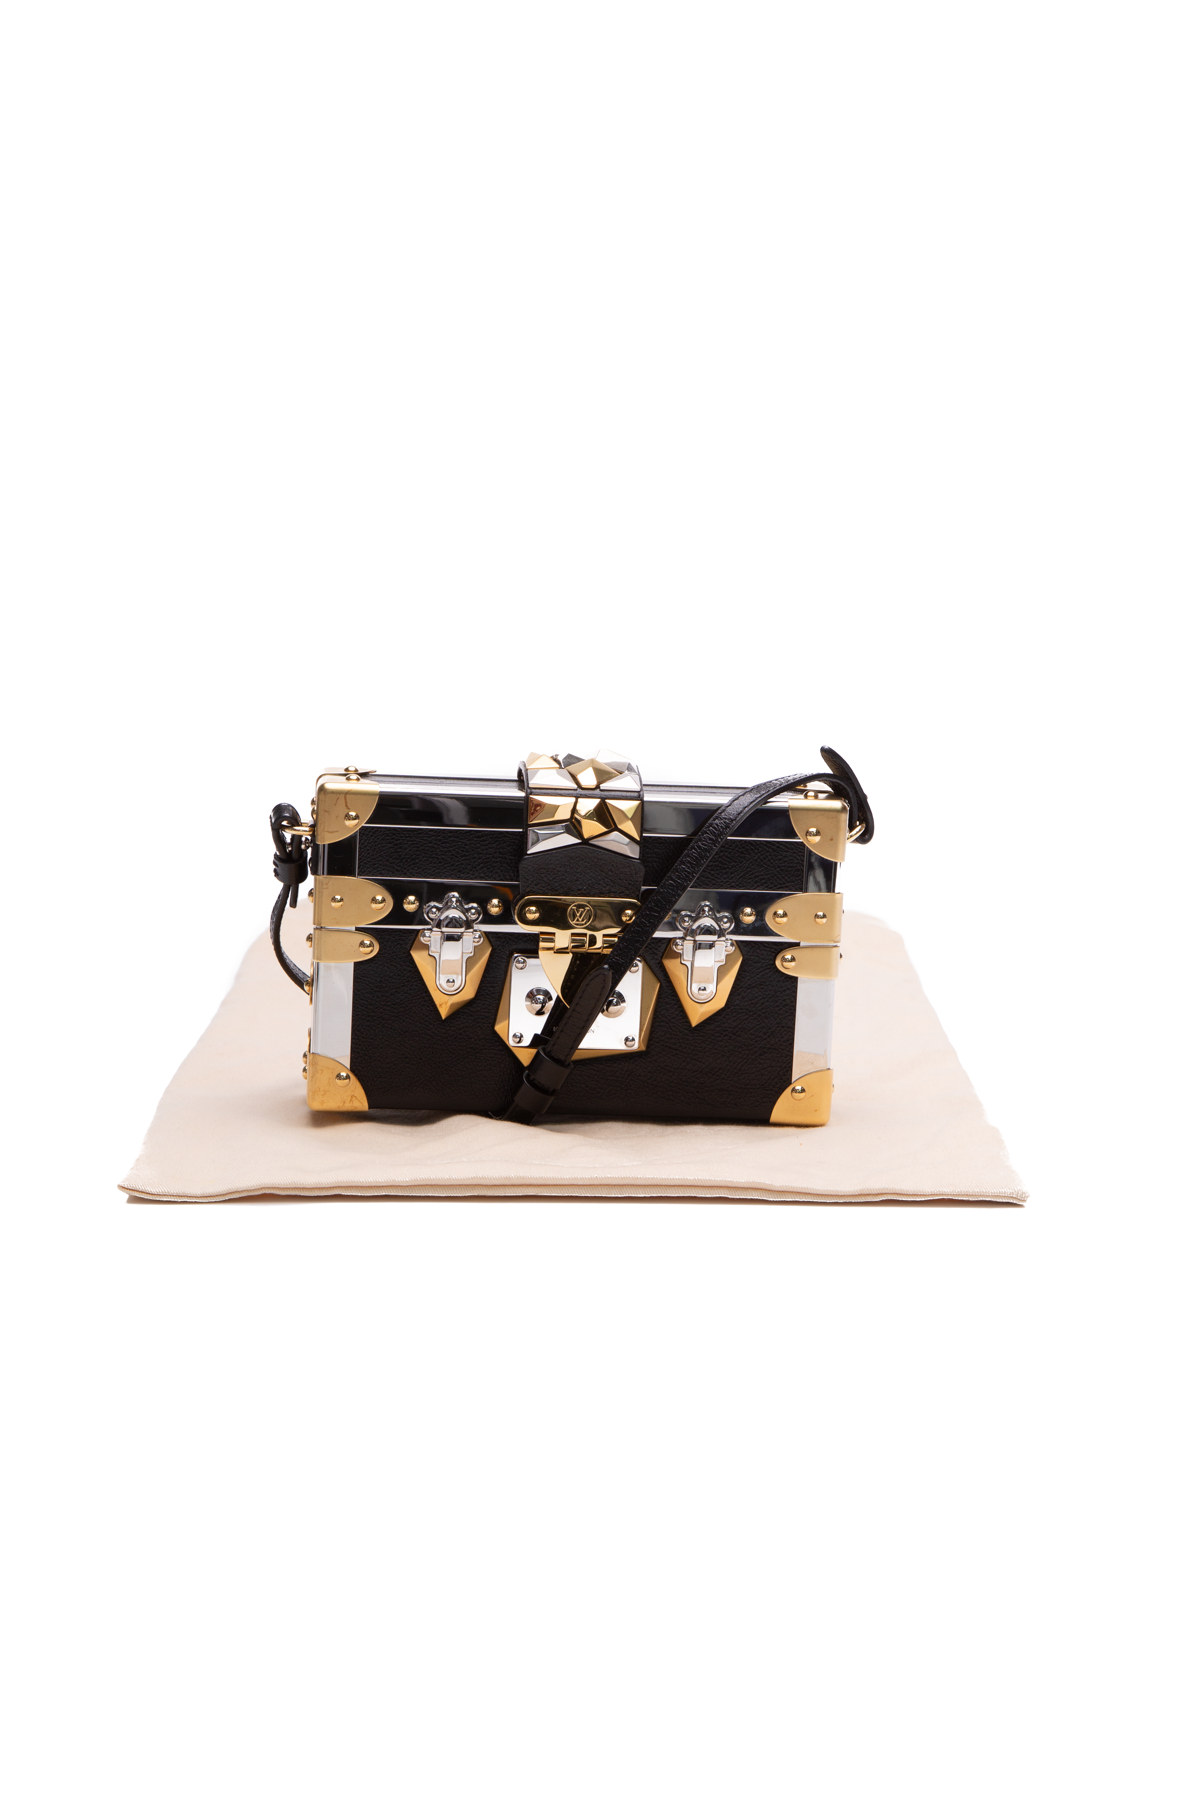 Louis Vuitton Made The Petit Malle Bag a Phone Case 